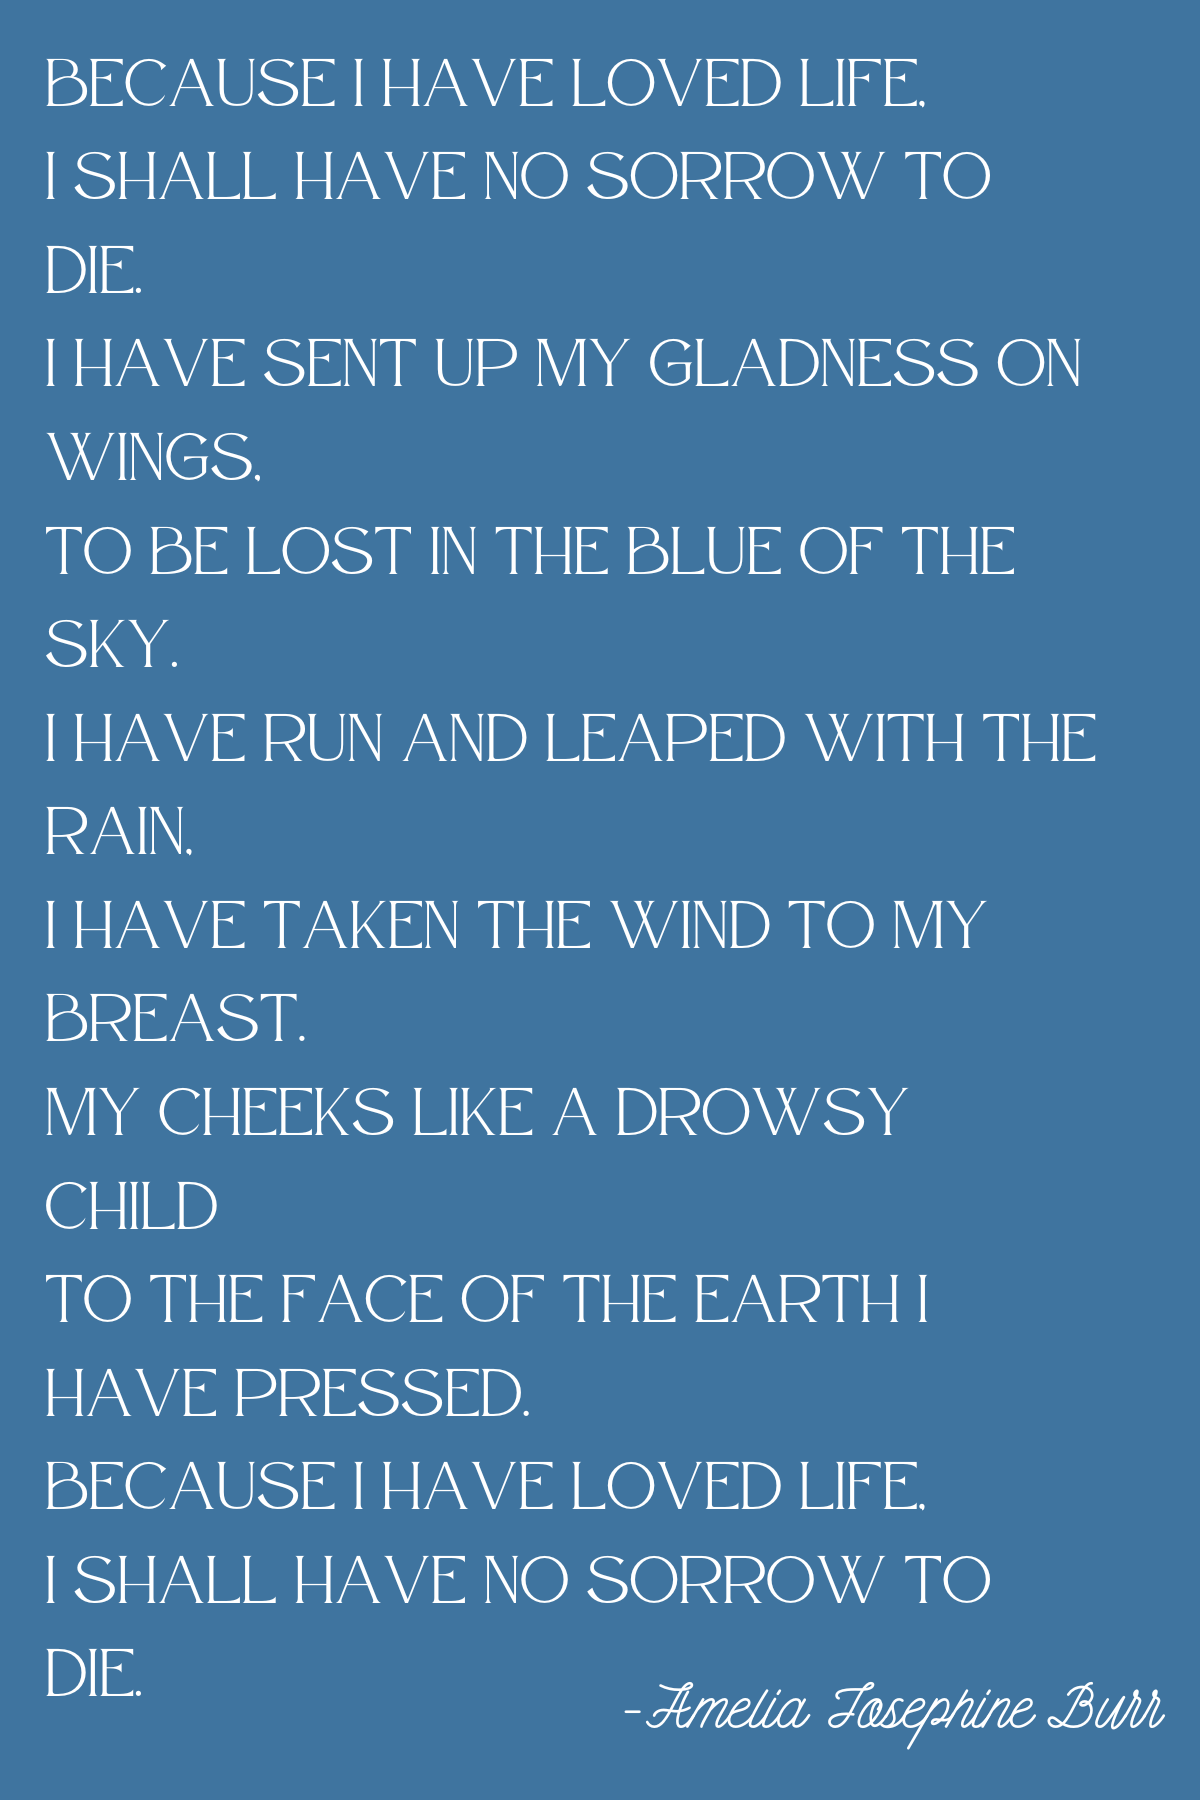 amelia josephine barr poem about death